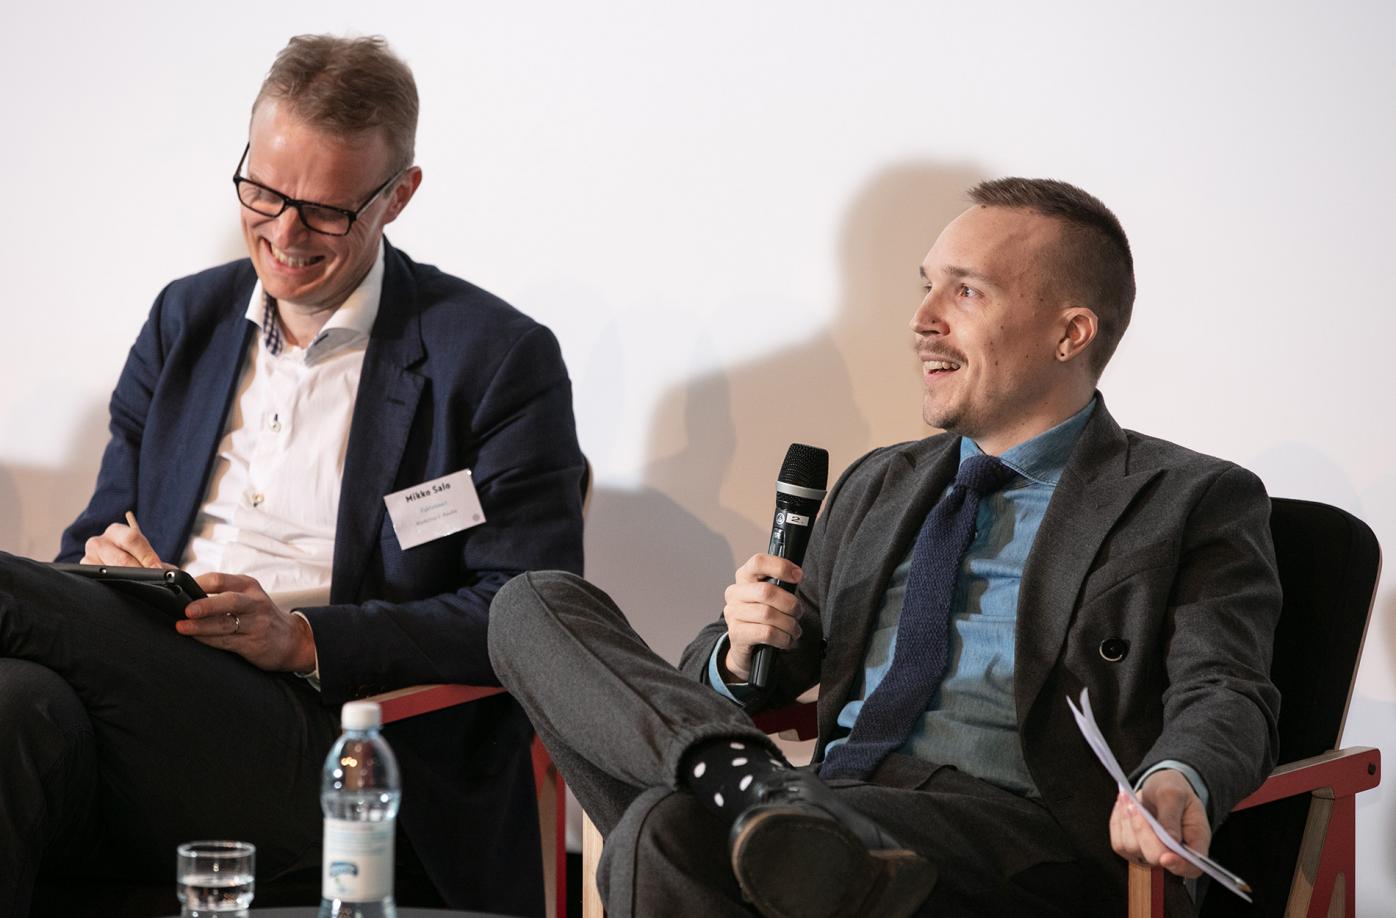 Mikko Salo, co-founder of Faktabaari and award-winning journalist Olli Seuri in a panel discussion.